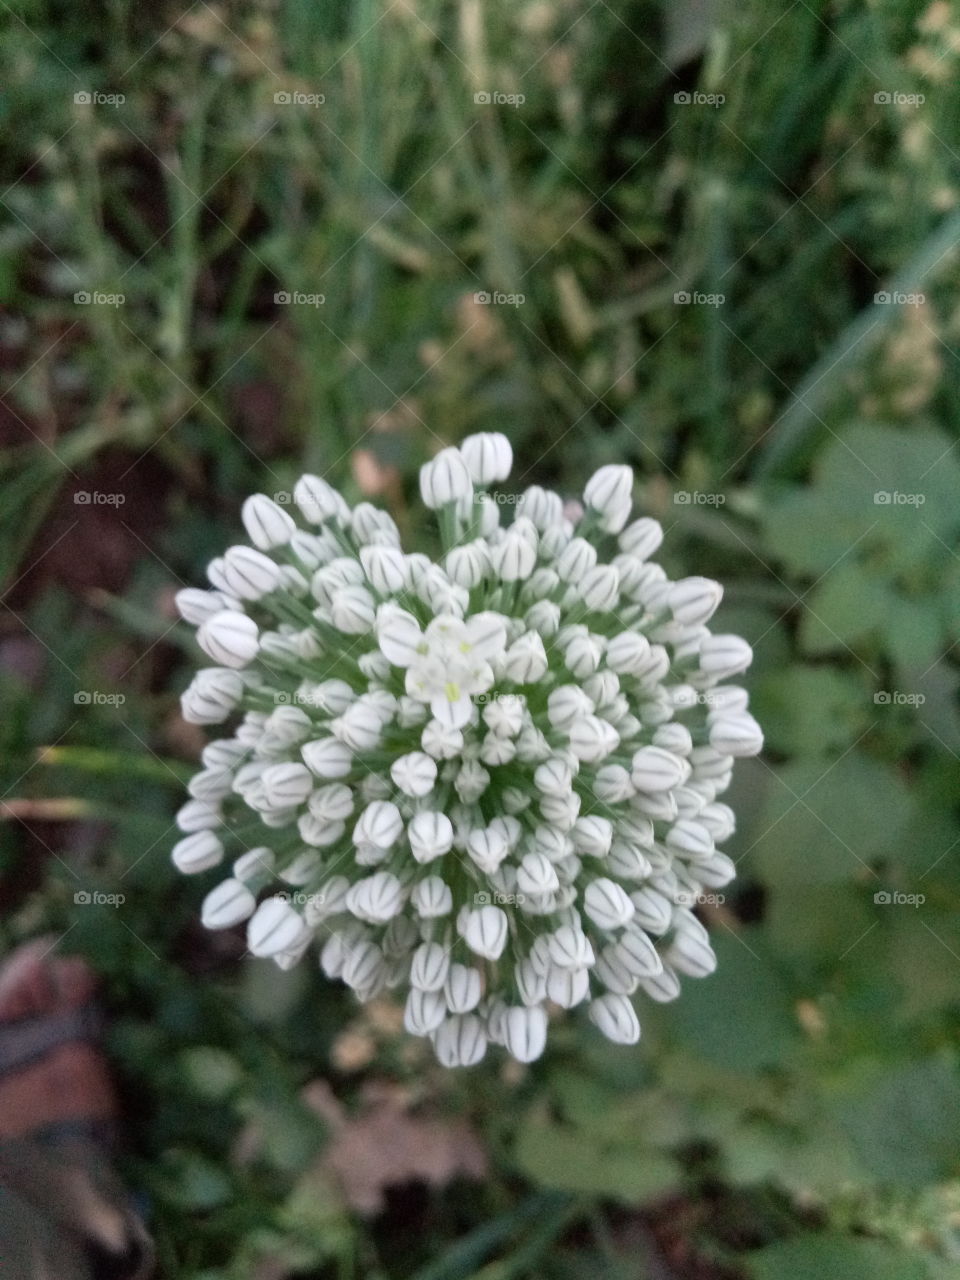 onion flower